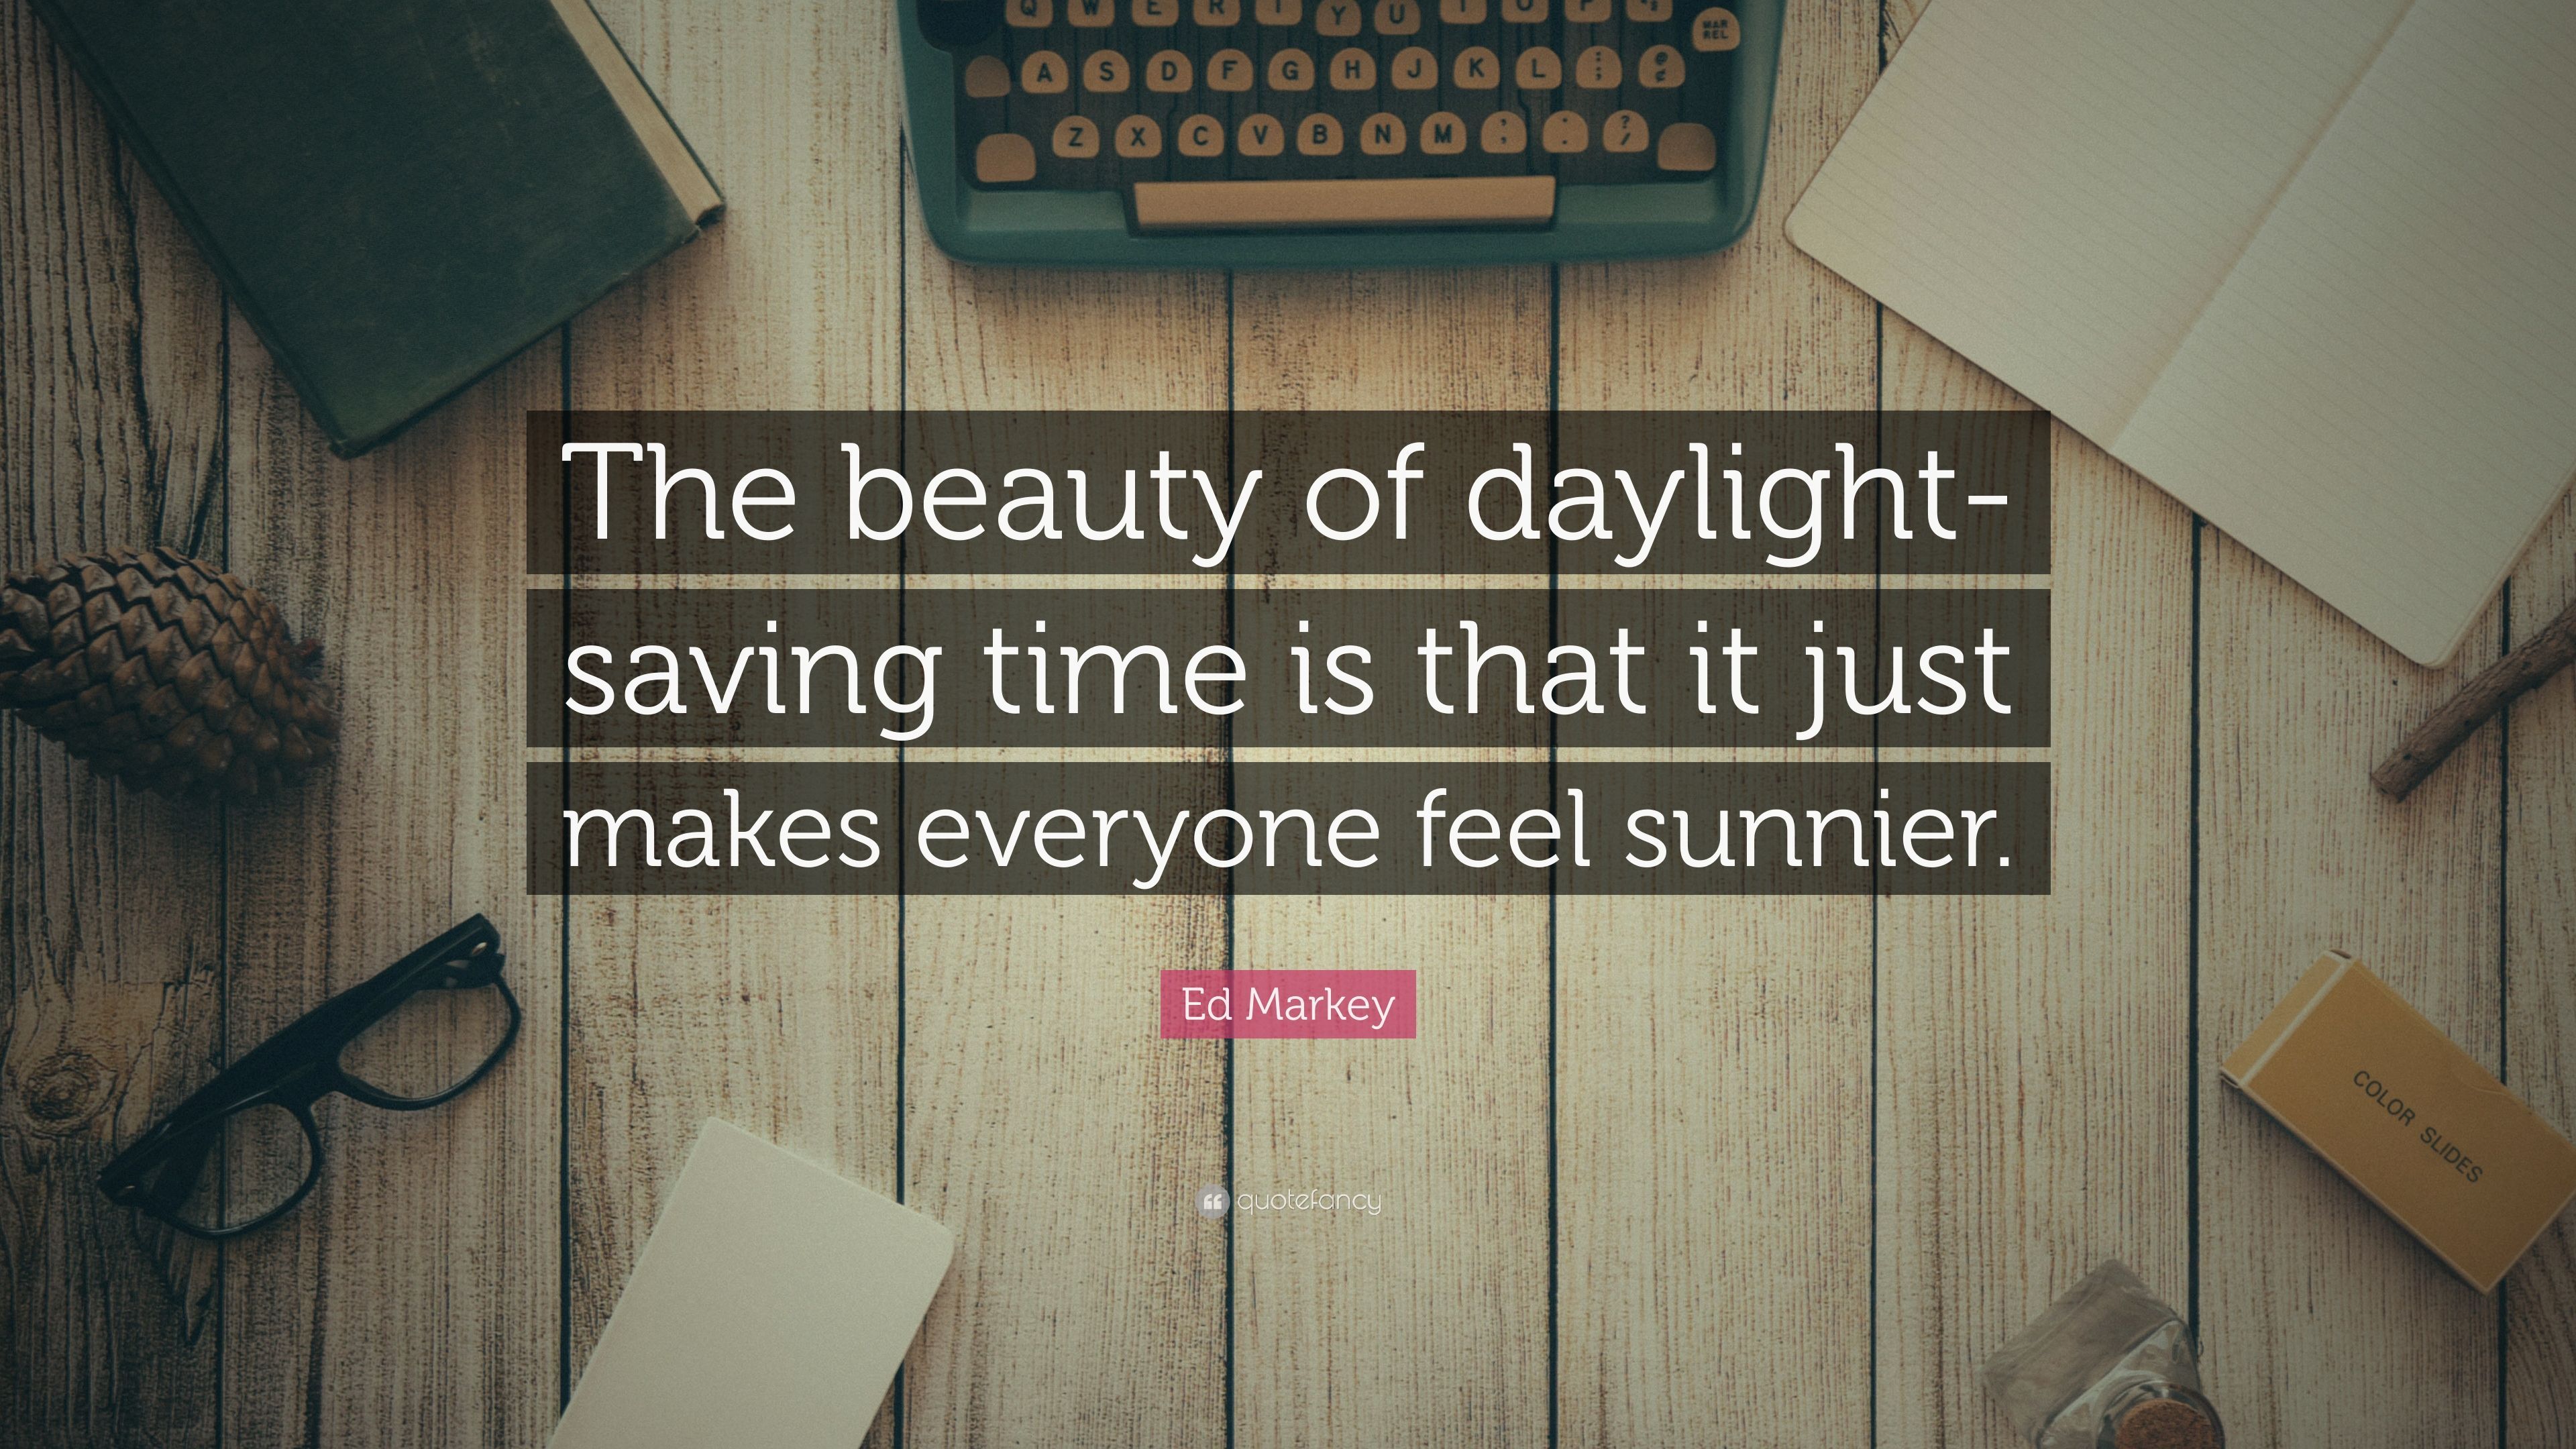 Ed Markey Quote: "The beauty of daylight 